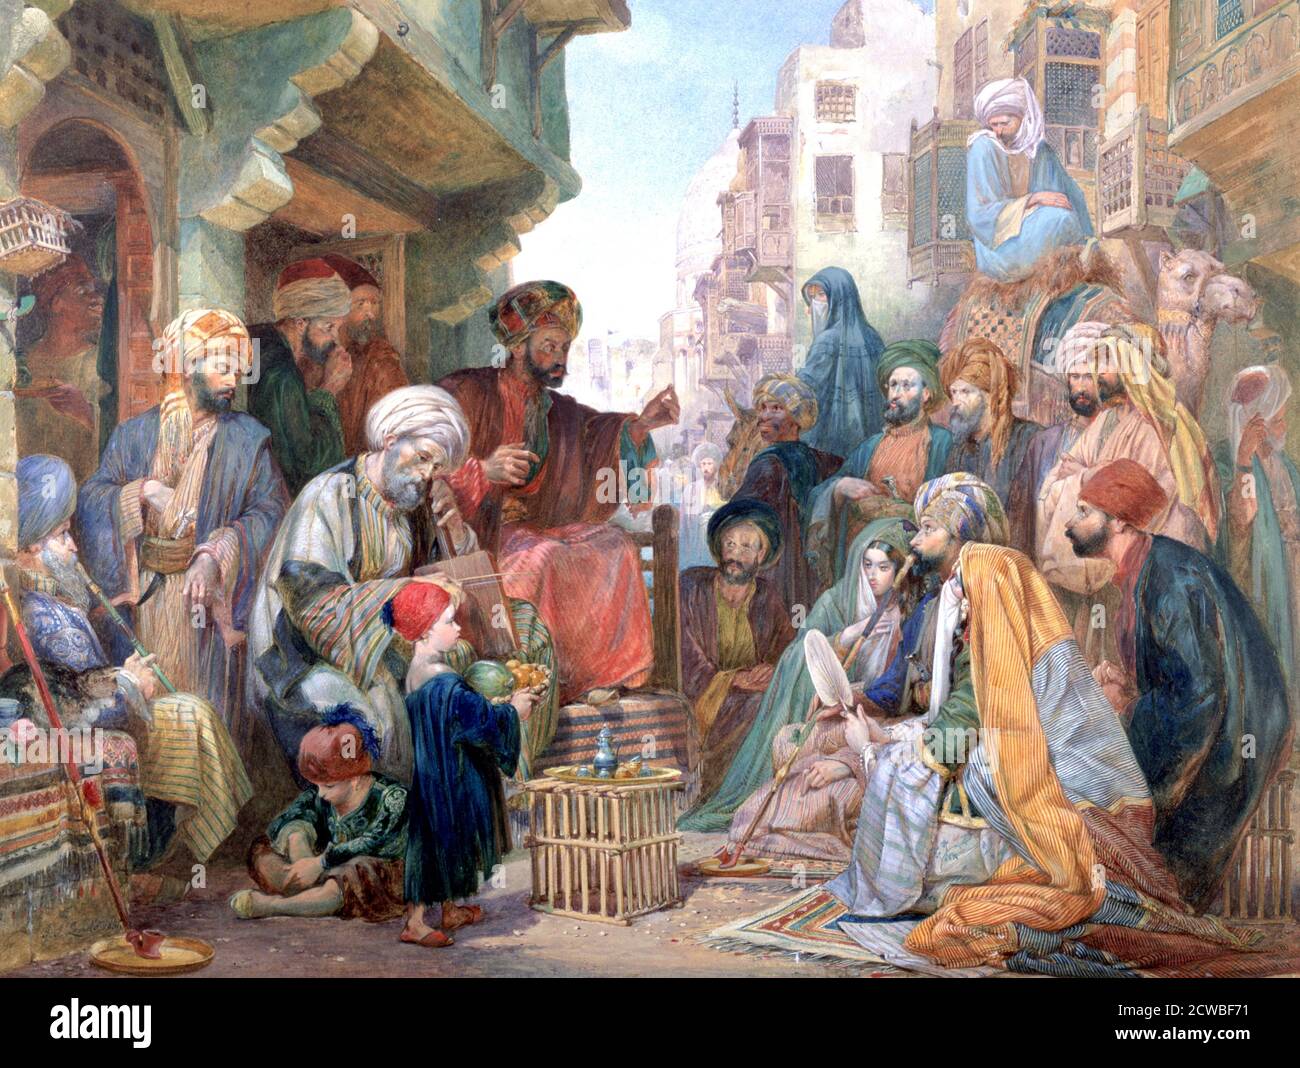 A Street in Cairo, Egypt', c1825-1876. Künstler: John Frederick Lewis. John Frederick Lewis RA (c1804-1876) war ein englischer Orientalist Maler. Stockfoto